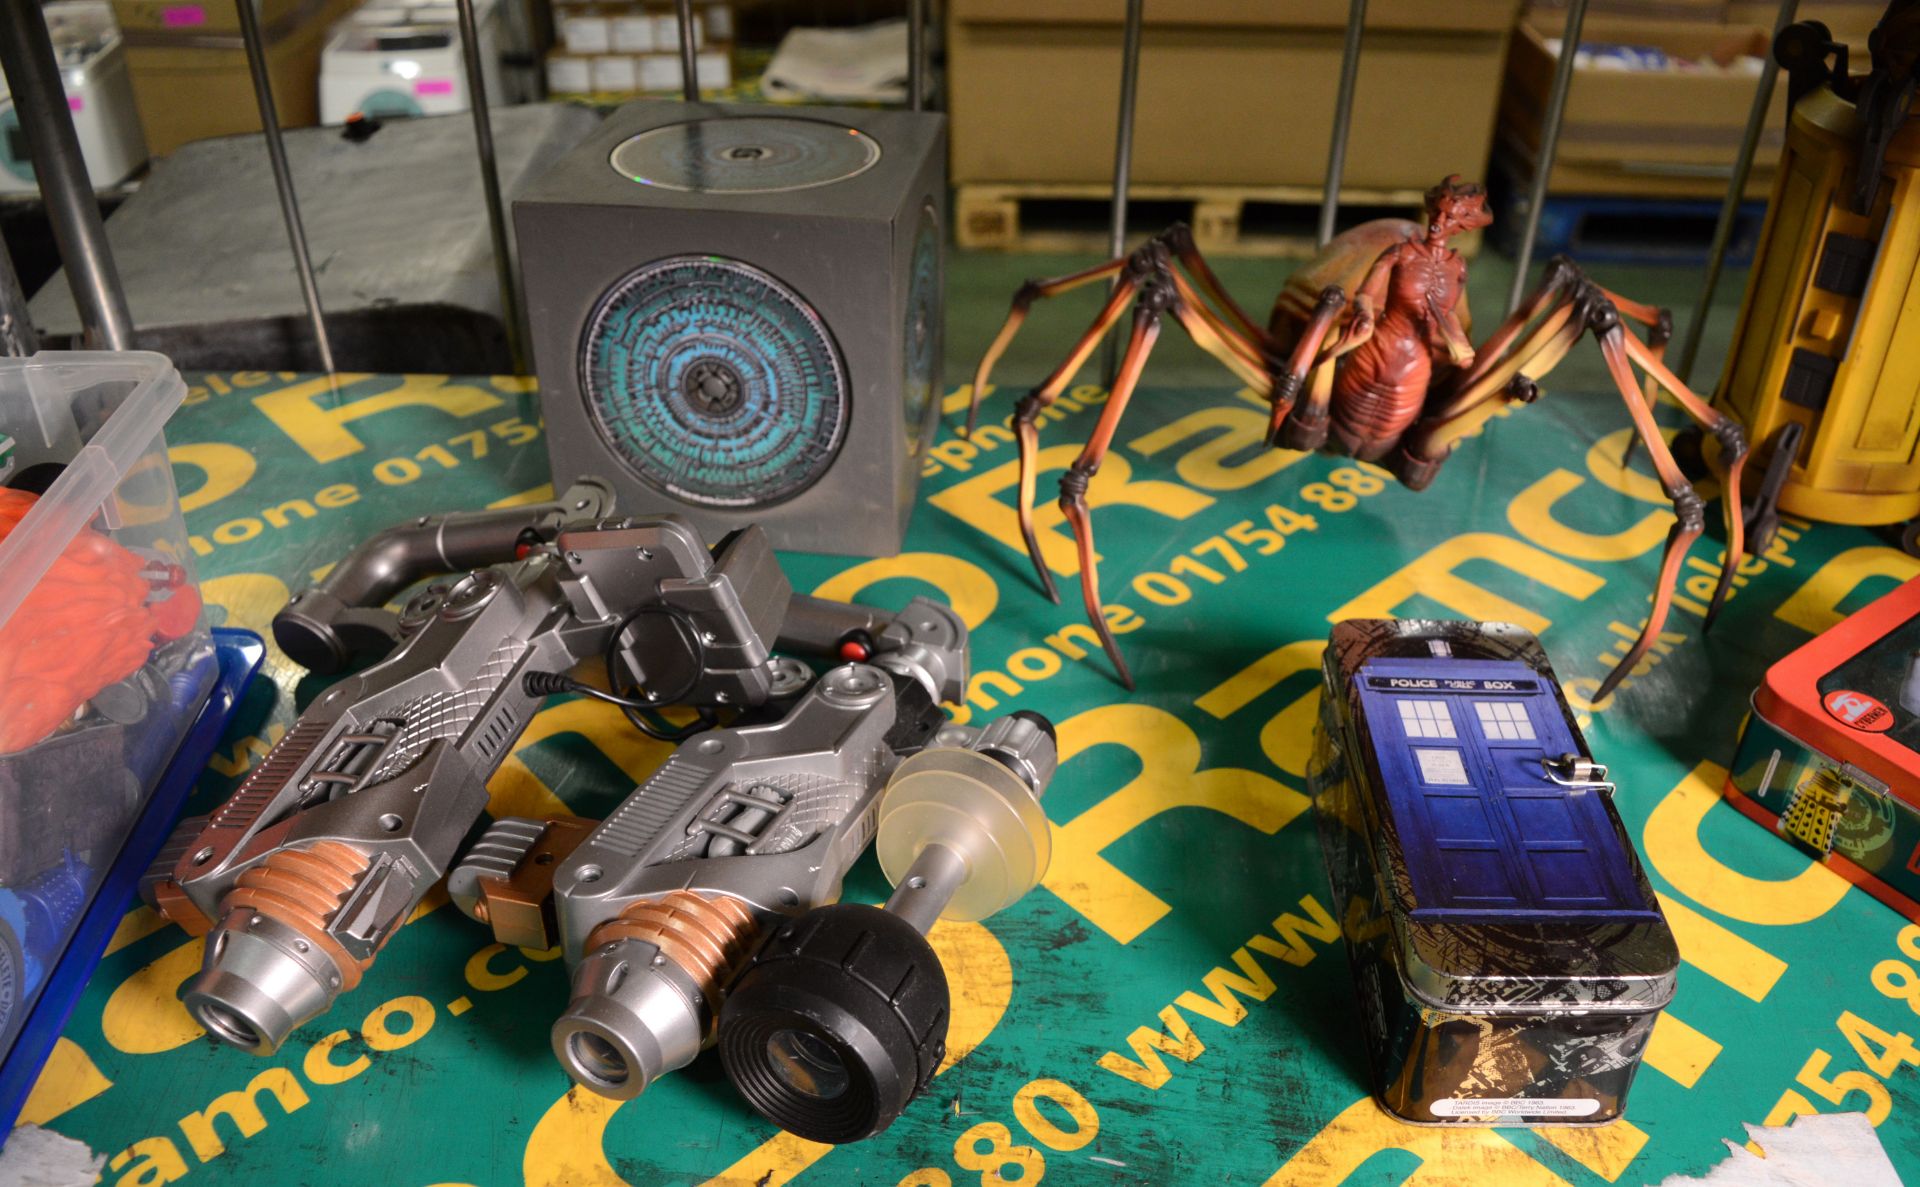 Dr Who Dalek, TARDIS, Figures, Canvas & Toy Guns. - Image 4 of 5